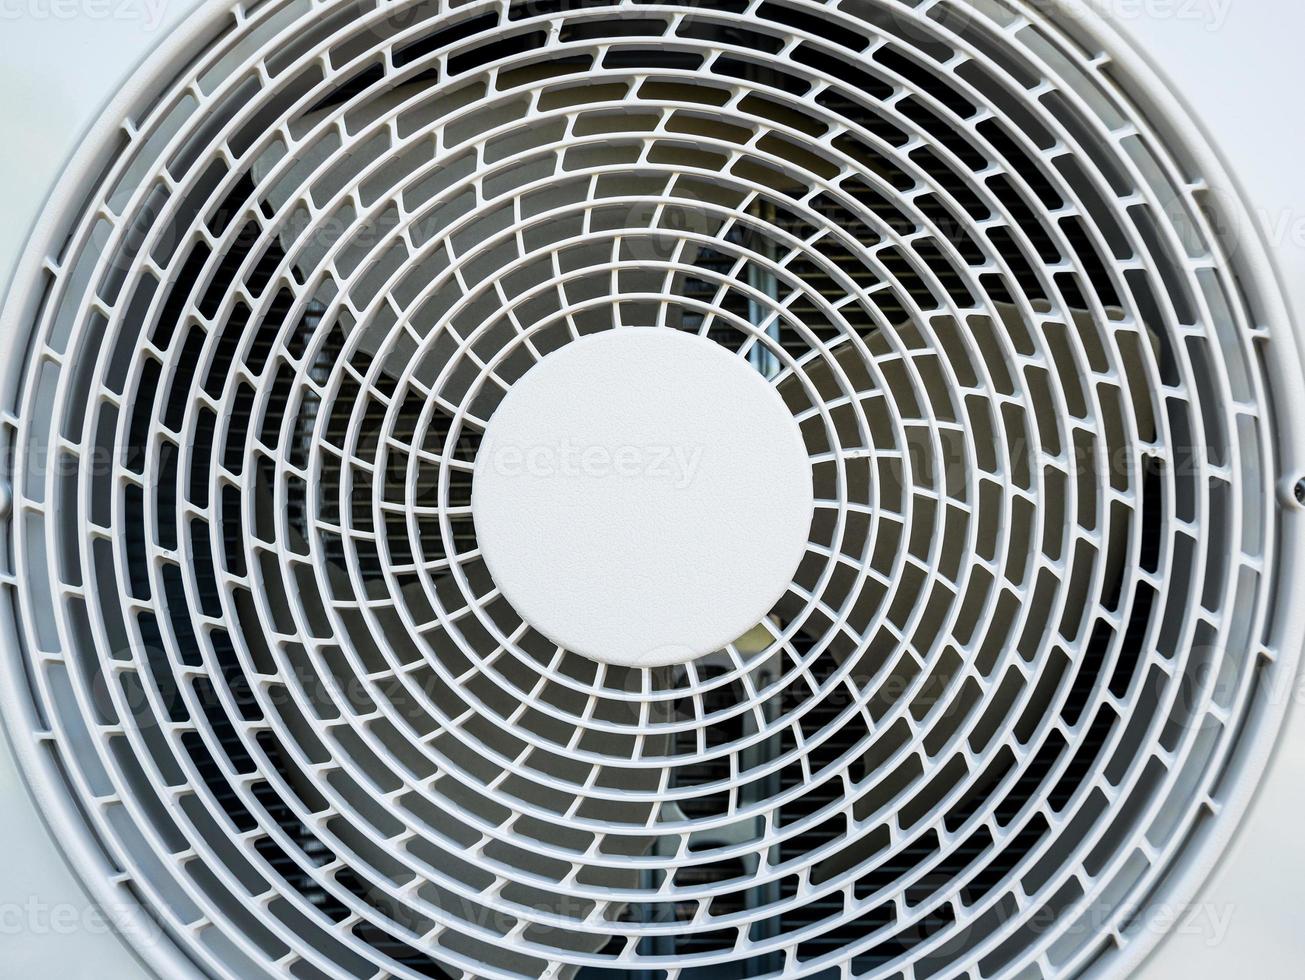 Air conditioning compressor photo